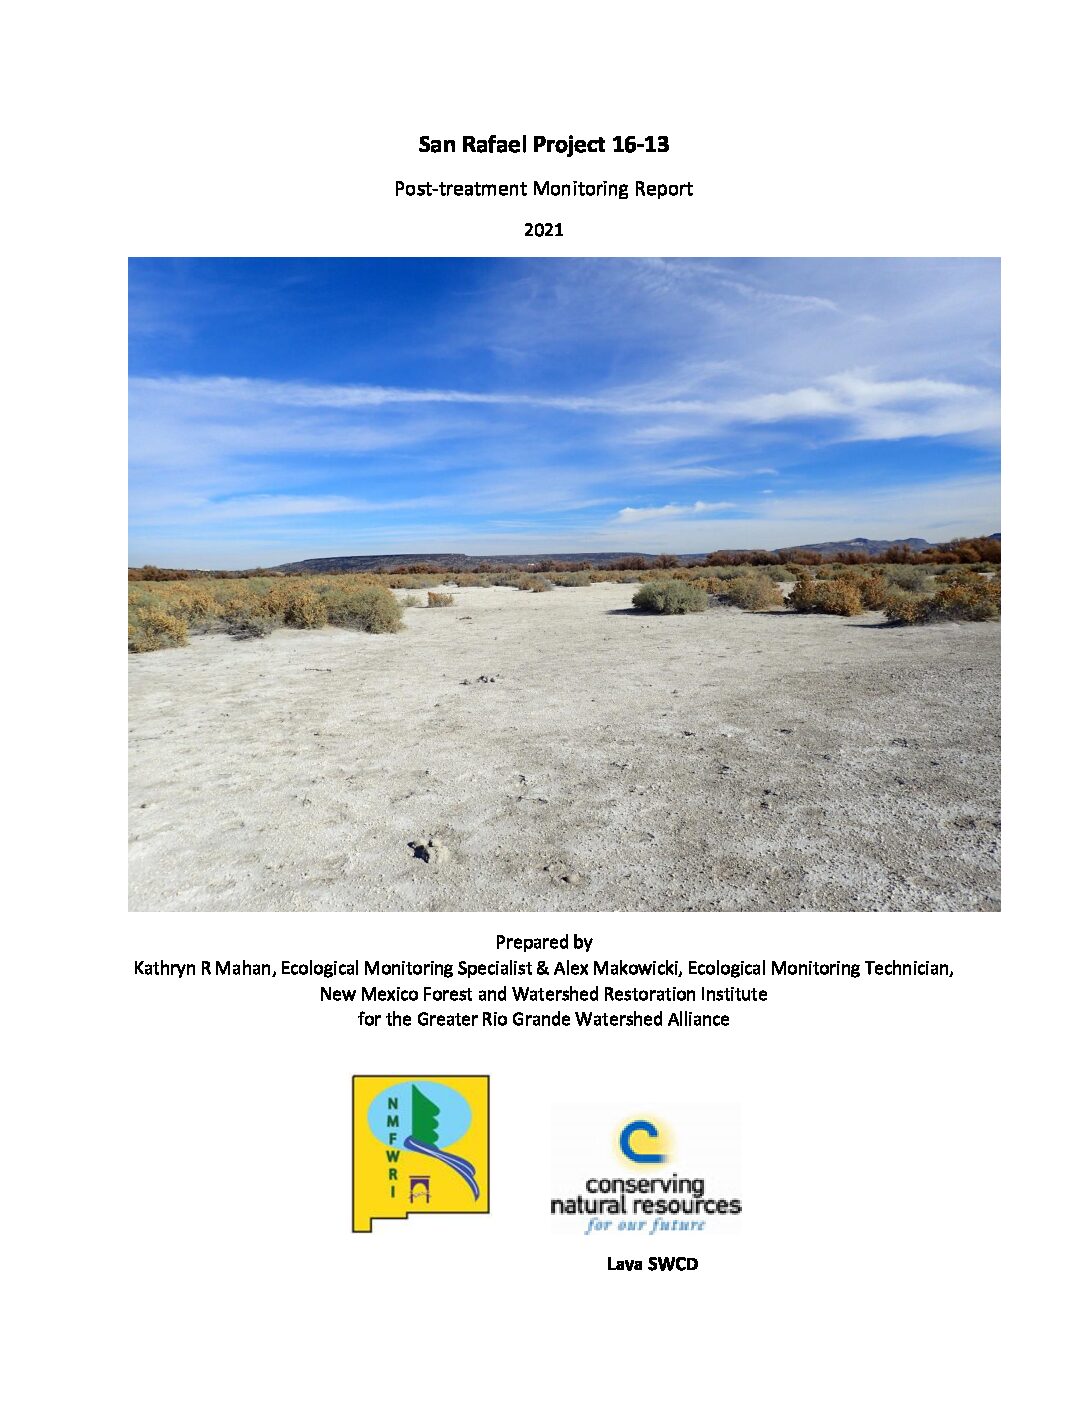 San Rafael 16.13 Post-treatment Monitoring Report 2021